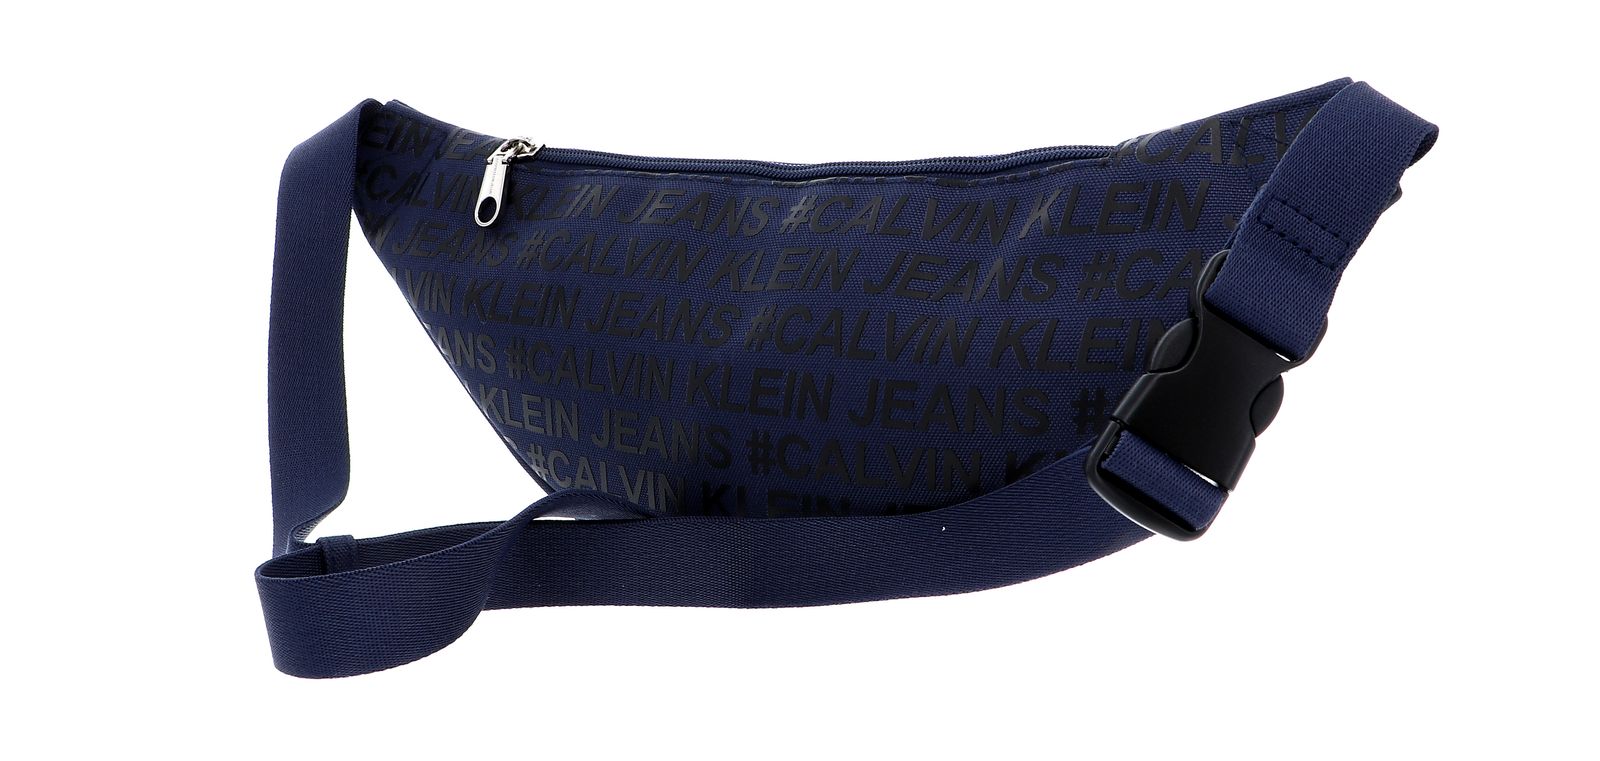 Calvin Klein Street Pack Navy with CKJ | Buy bags, purses & accessories